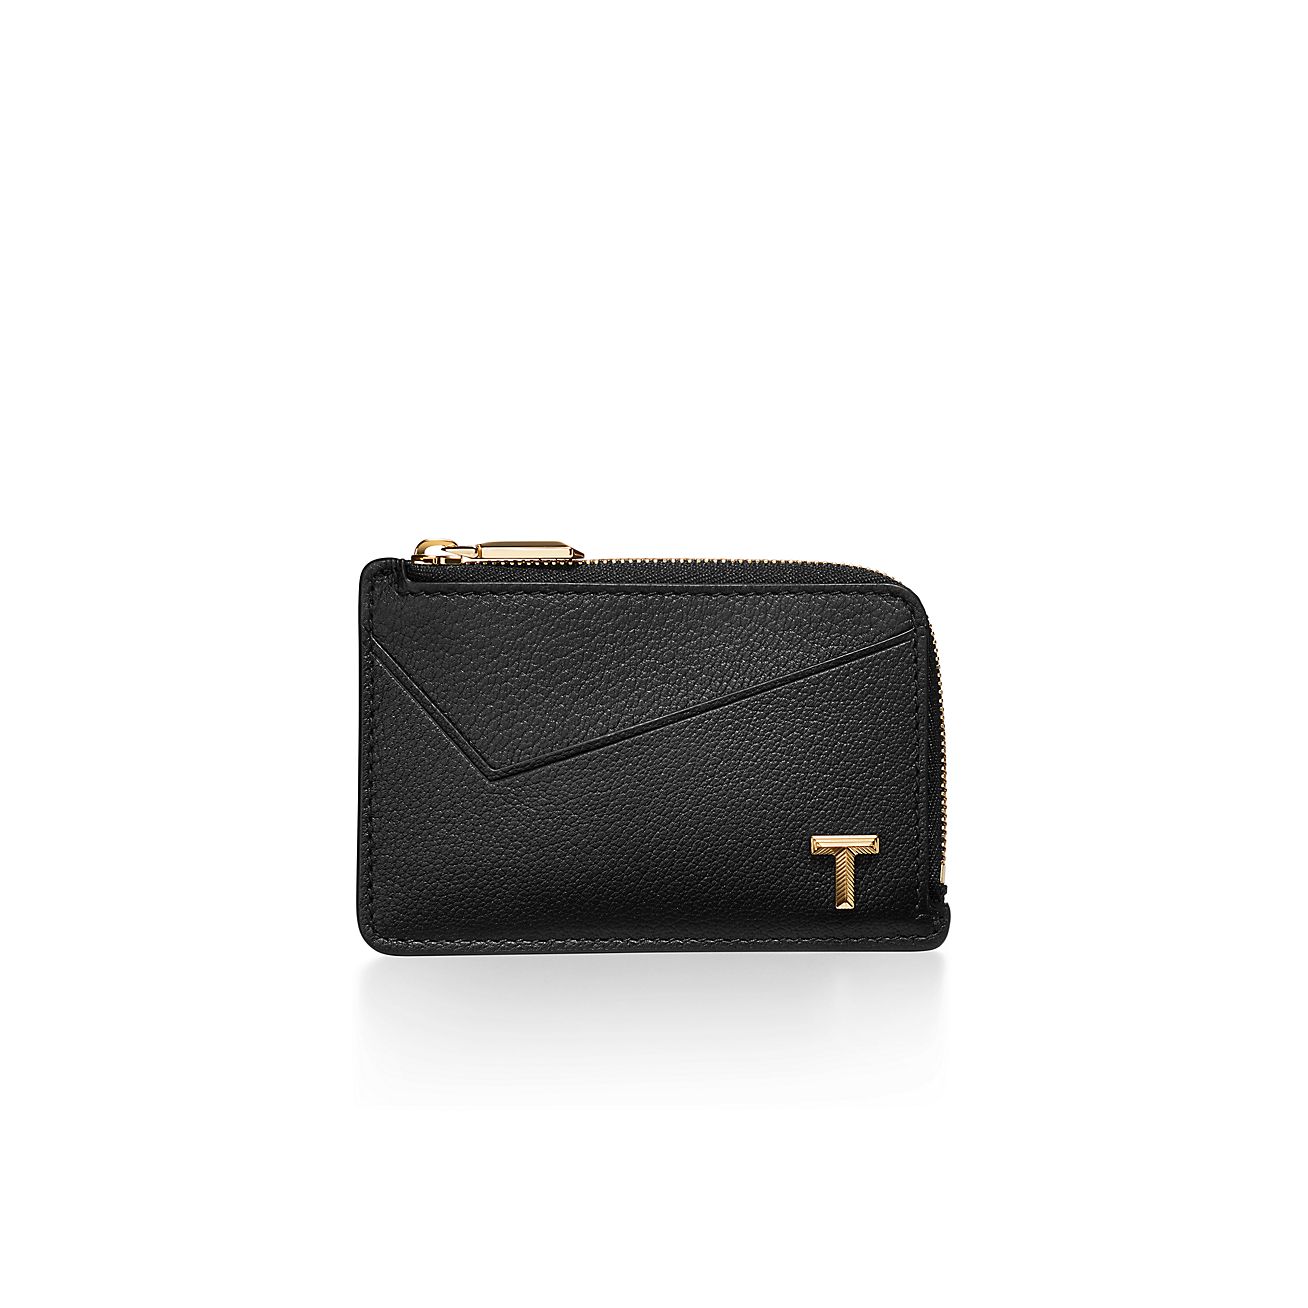 Tiffany T Zip Card Case in Black Leather | Tiffany & Co.